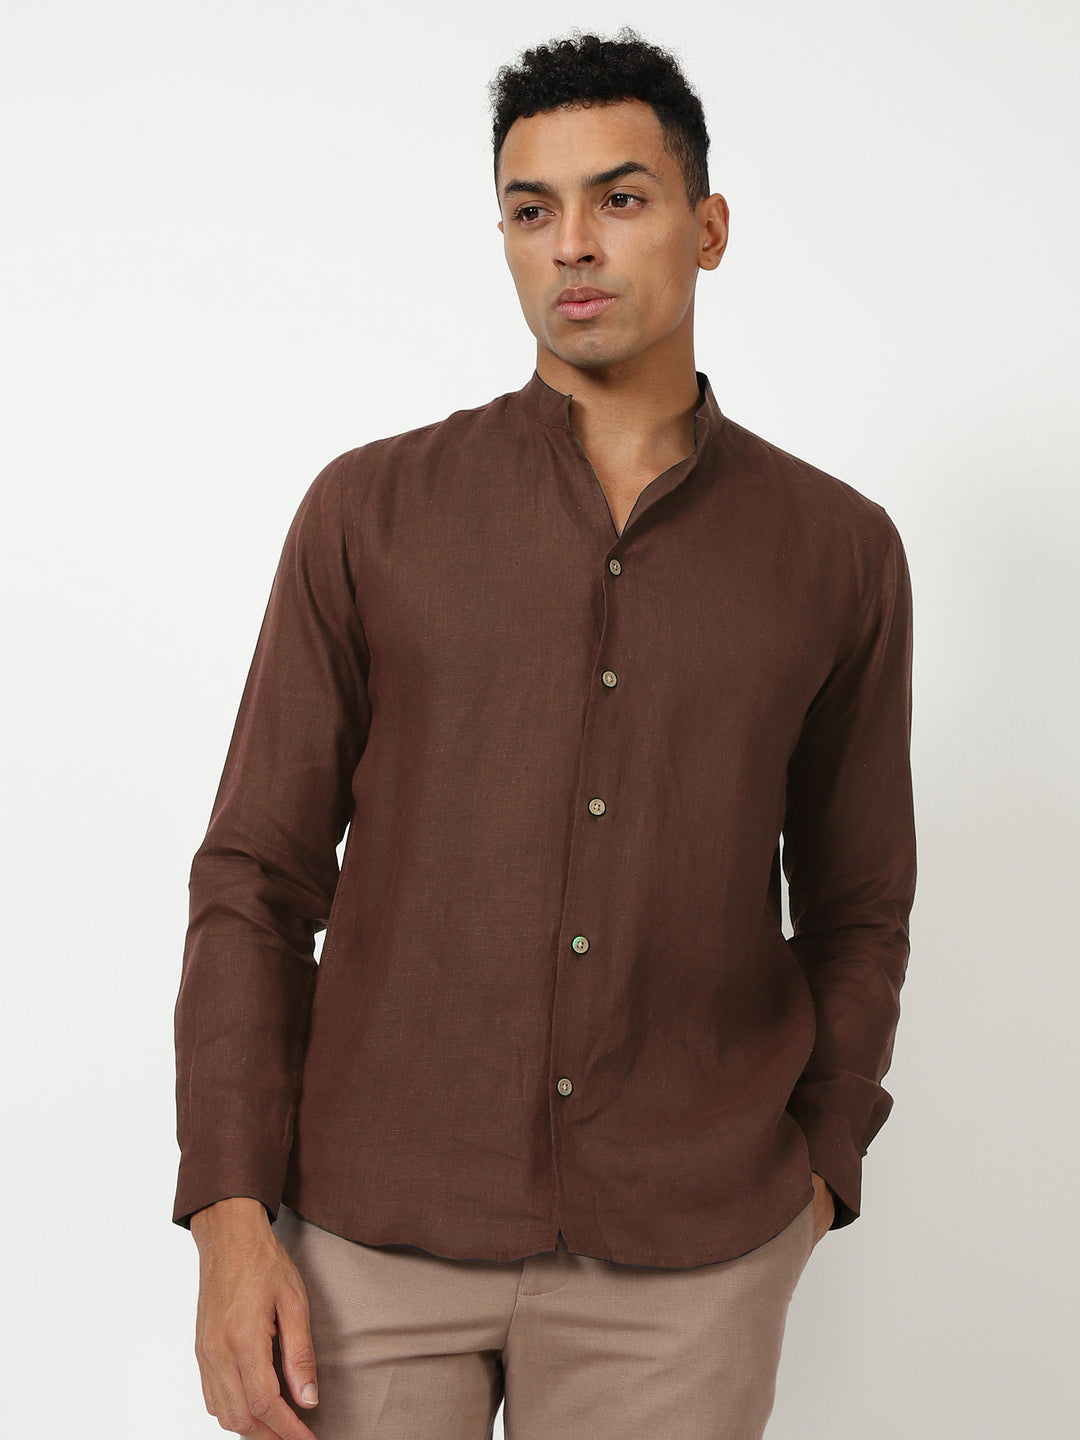 Craig - Pure Linen V Neck Full Sleeve Shirt - Coffee Brown